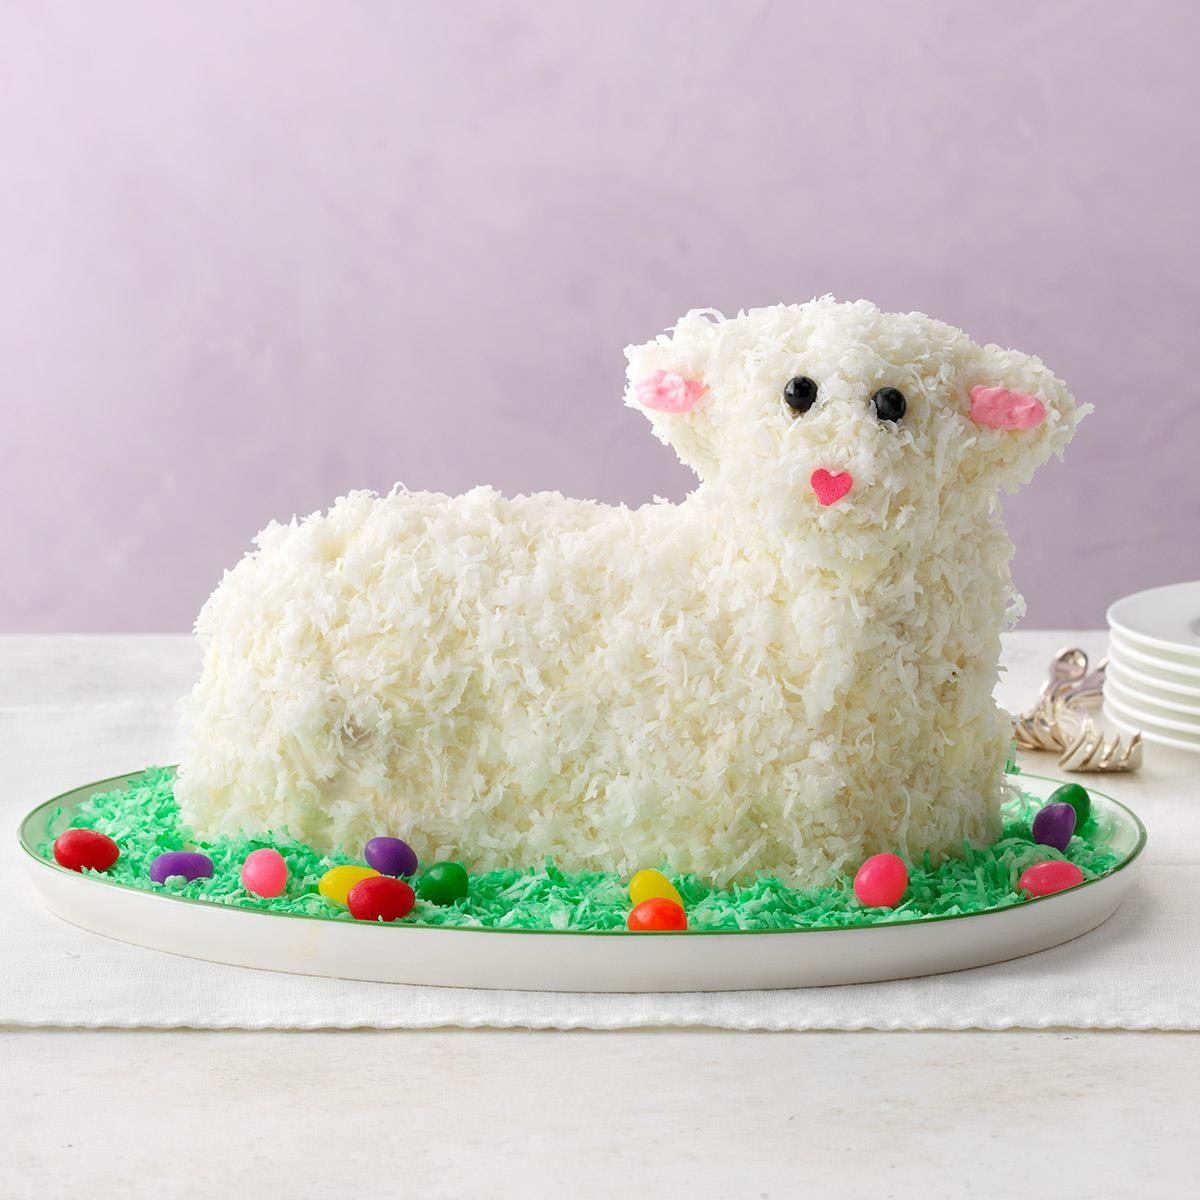 Easter Lamb Cake Luxury Easter Lamb Cake Recipe How to Make It